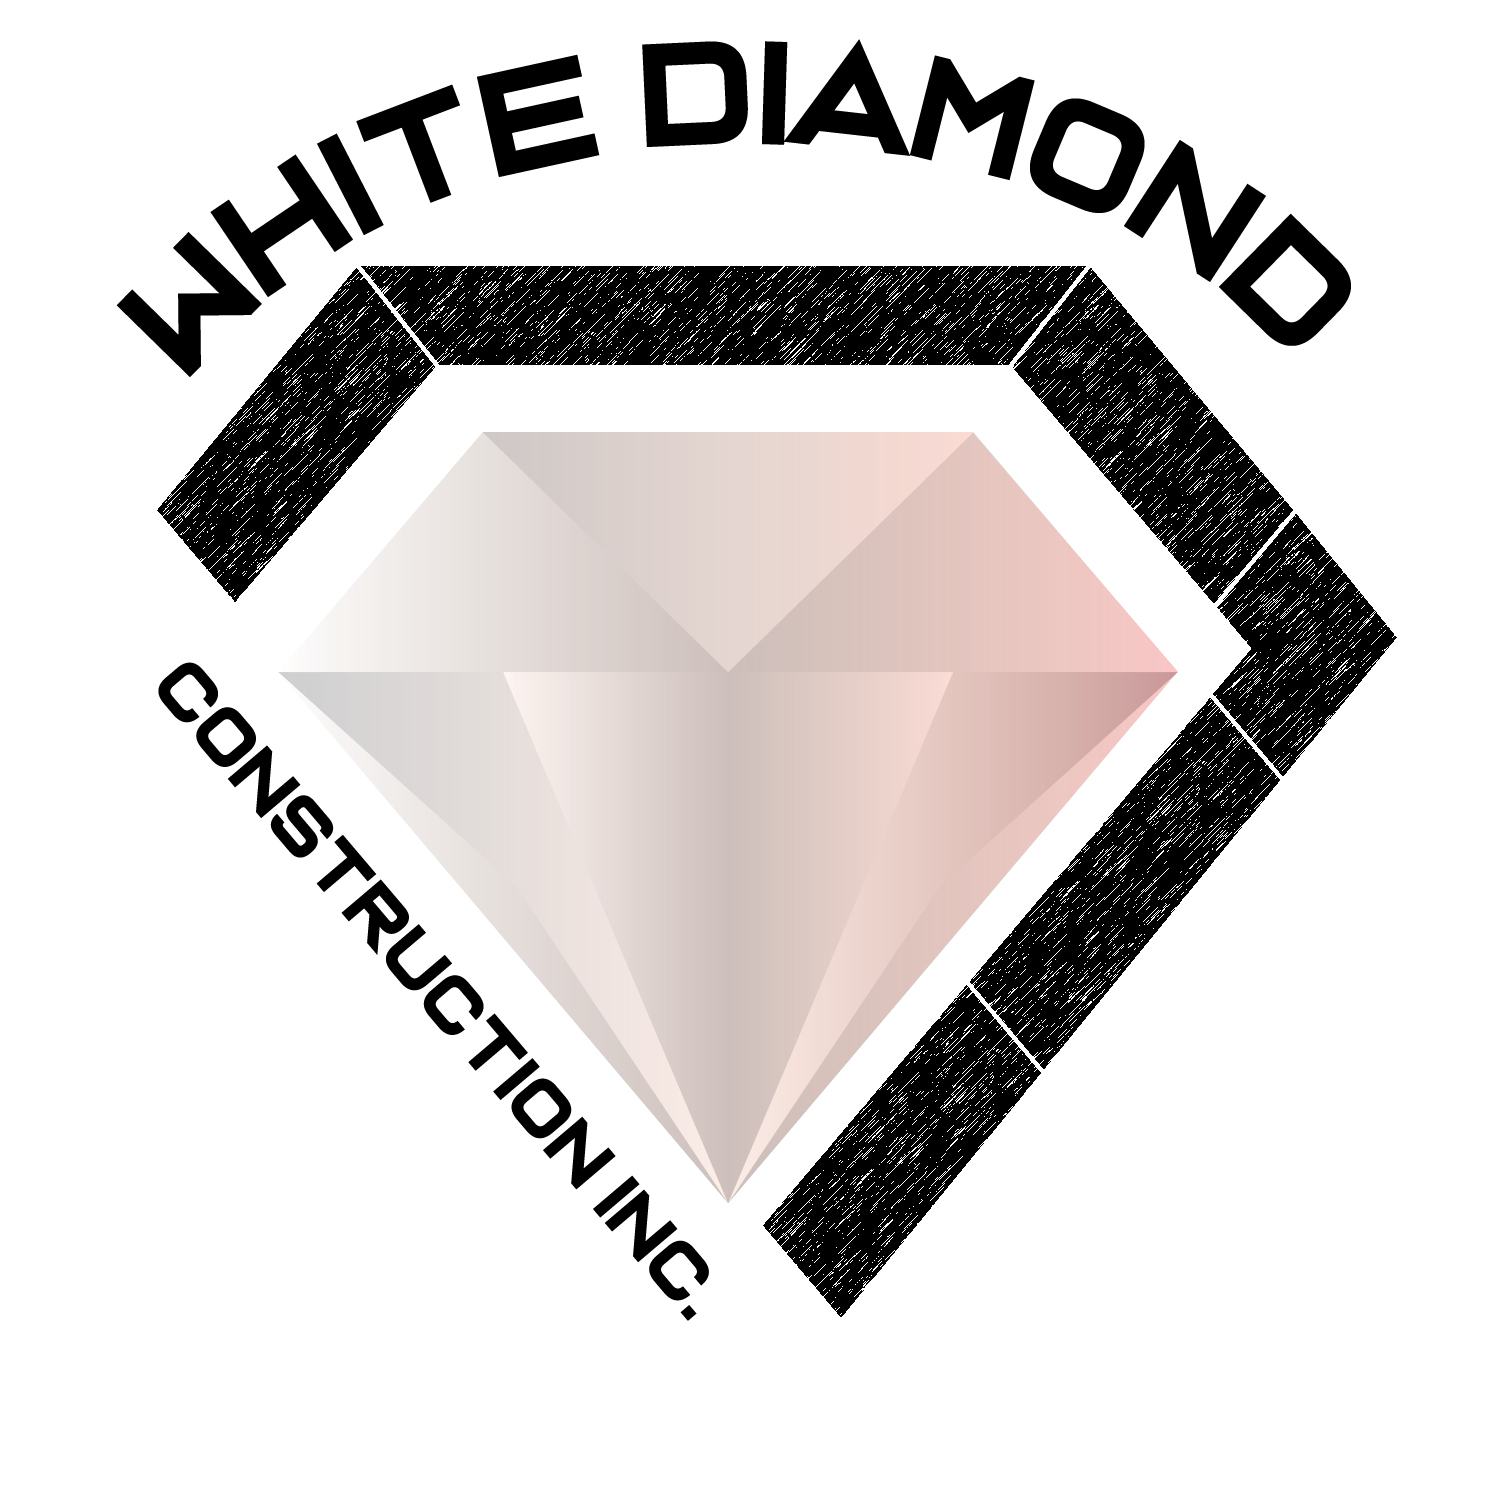 White Diamond Construction, Inc. Logo